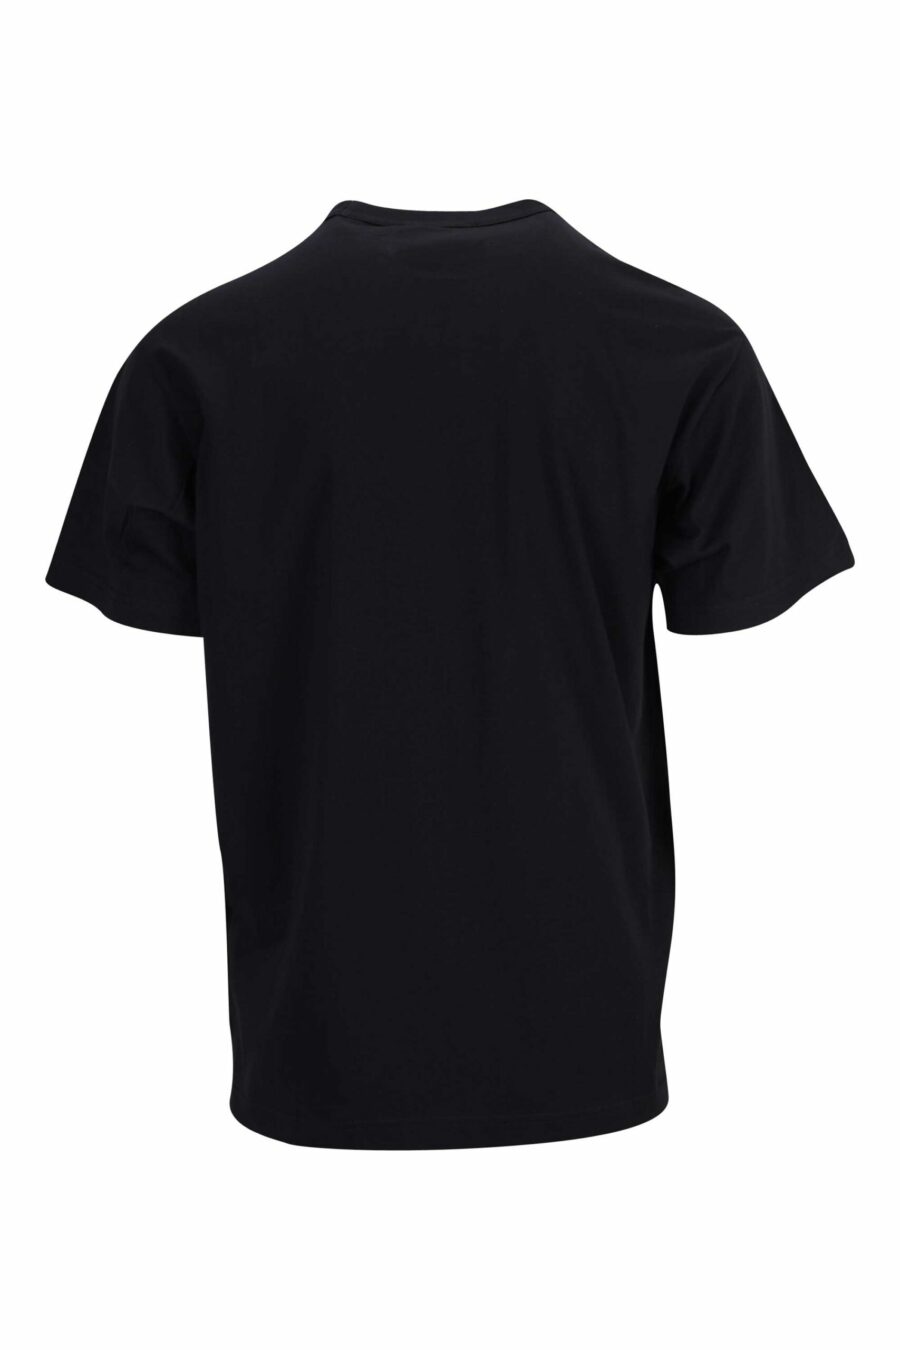 Black T-shirt with contrasting circular mini-logo - 8052019471700 1 scaled